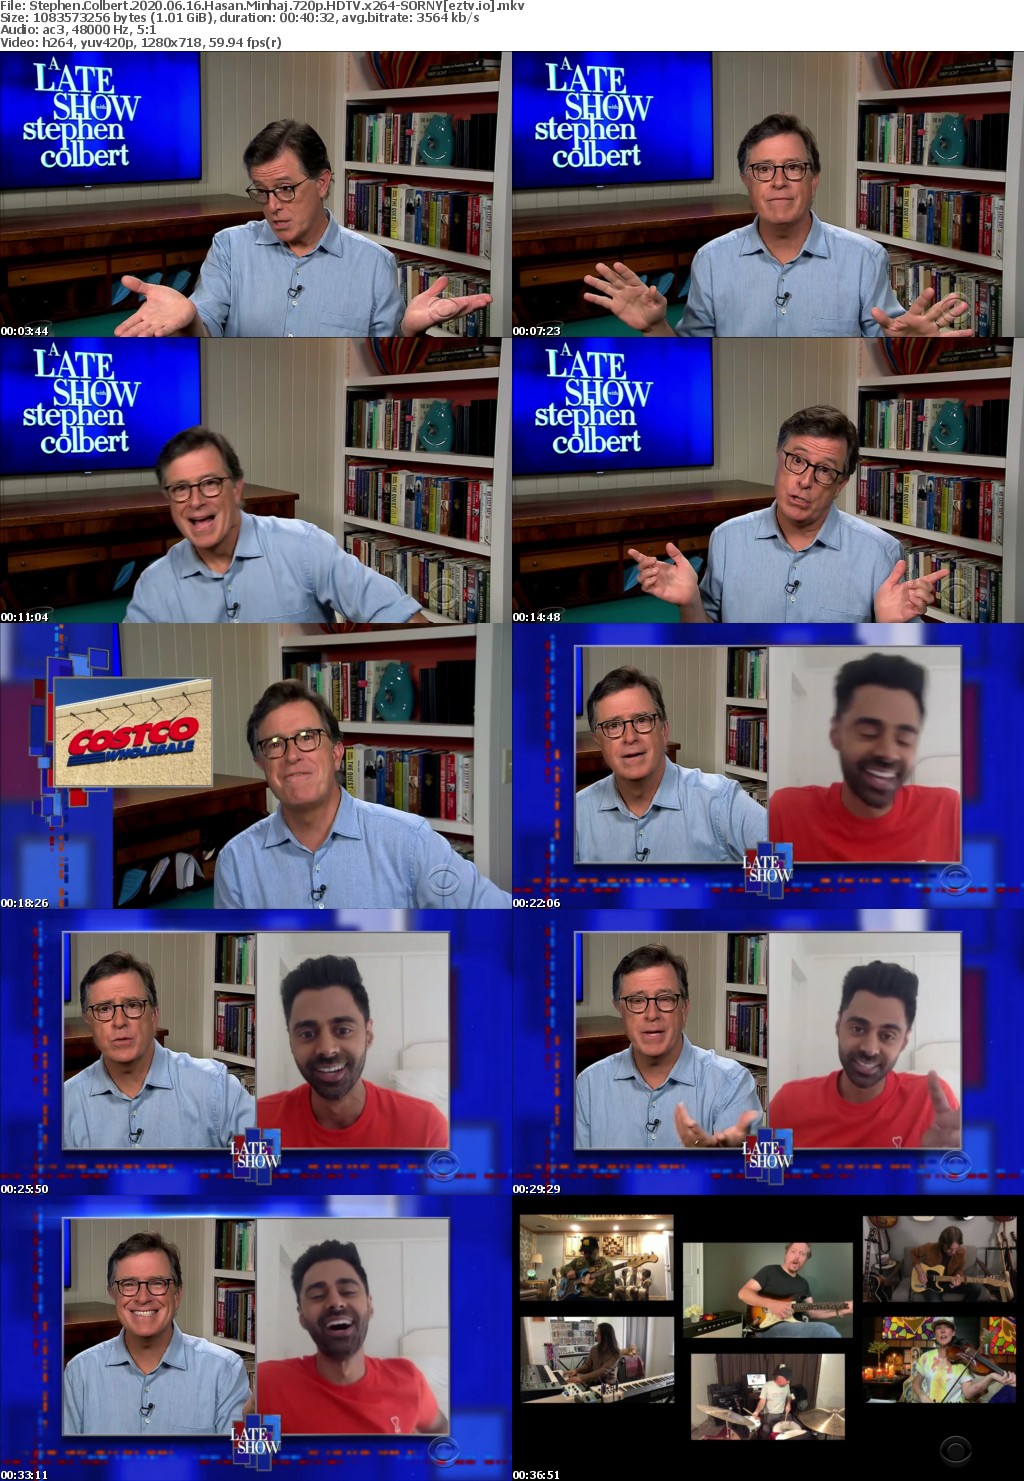 Stephen Colbert 2020 06 16 Hasan Minhaj 720p HDTV x264-SORNY